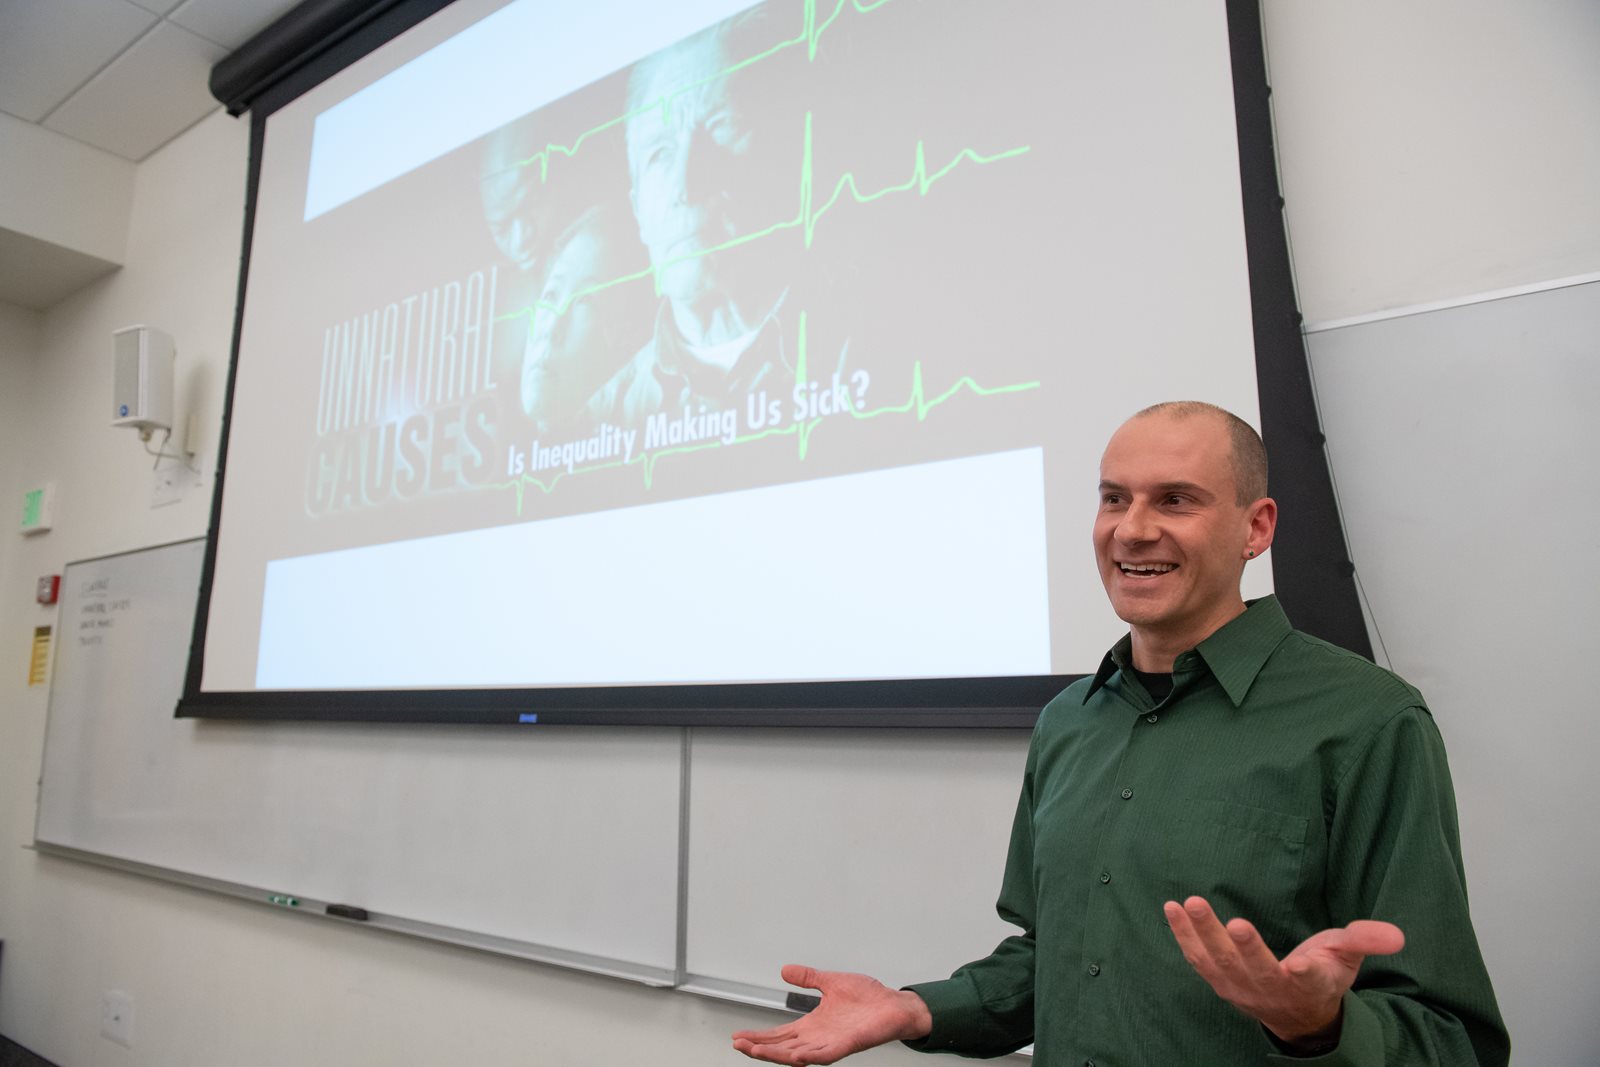 Chris Wade teaching in class in front of screen.